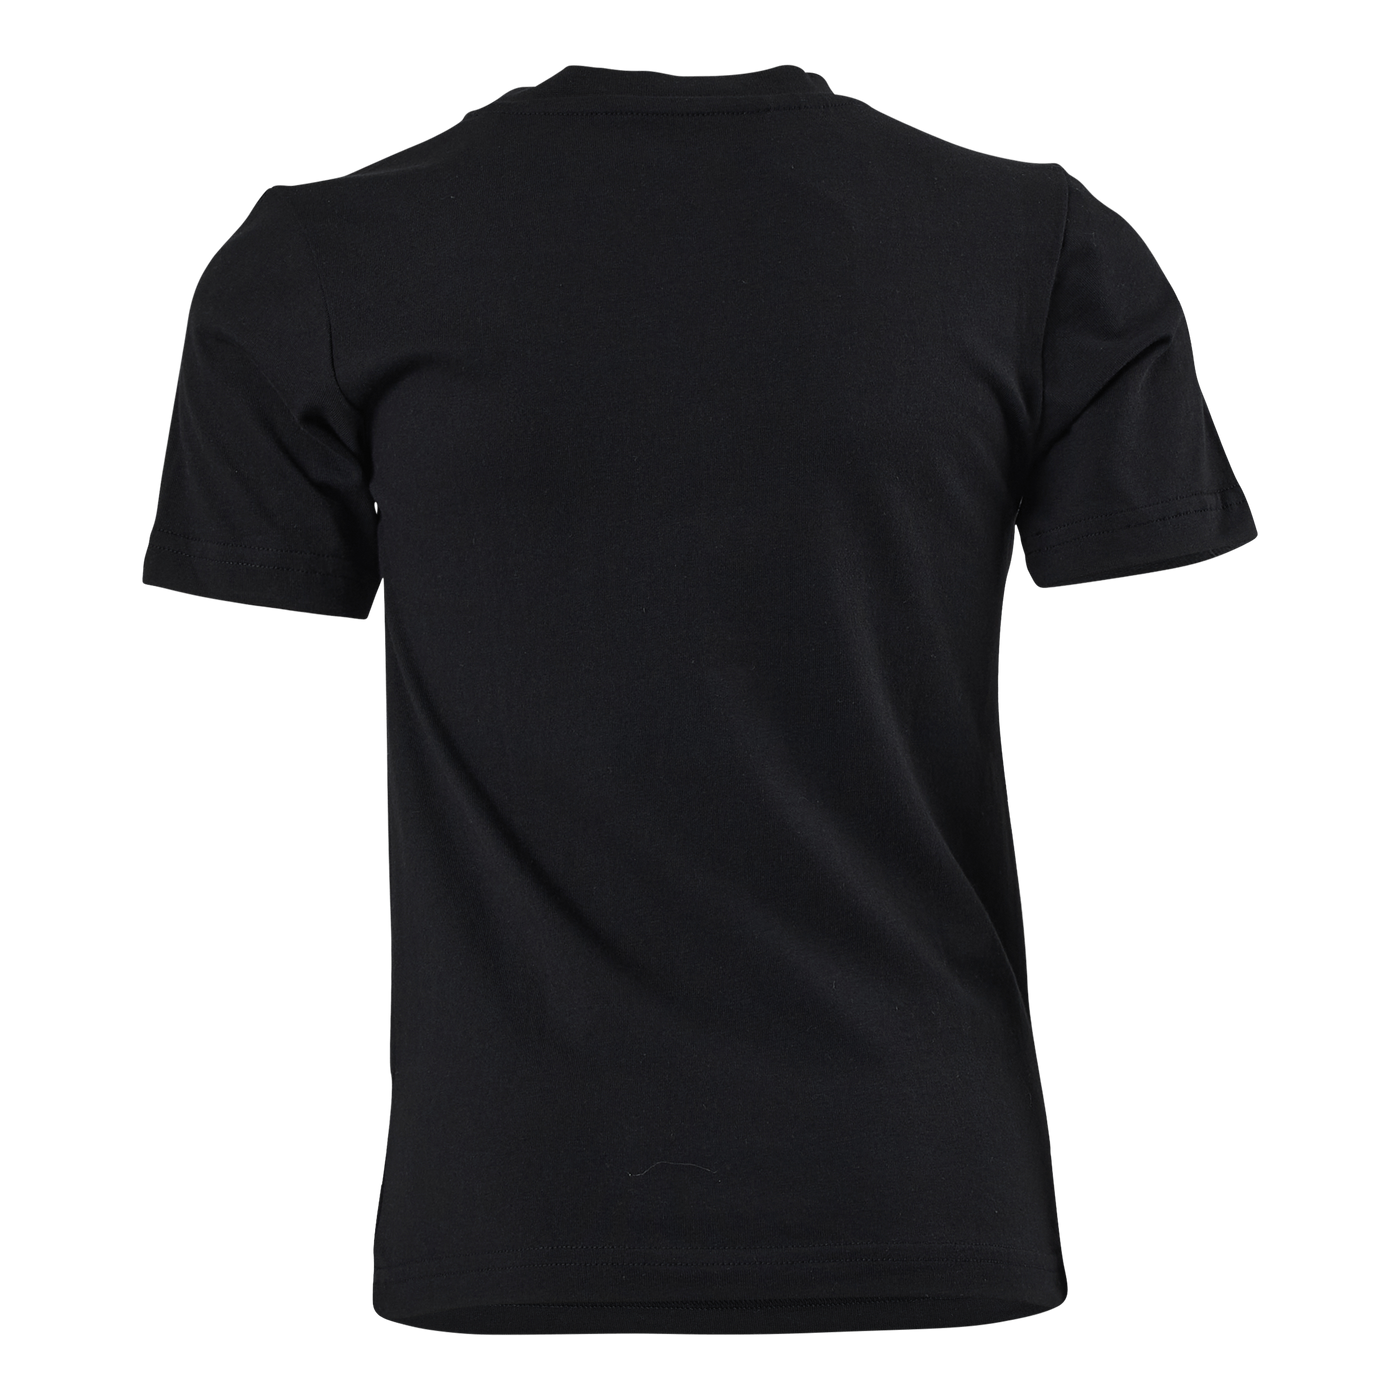 Gaming Graphic T-Shirt Black